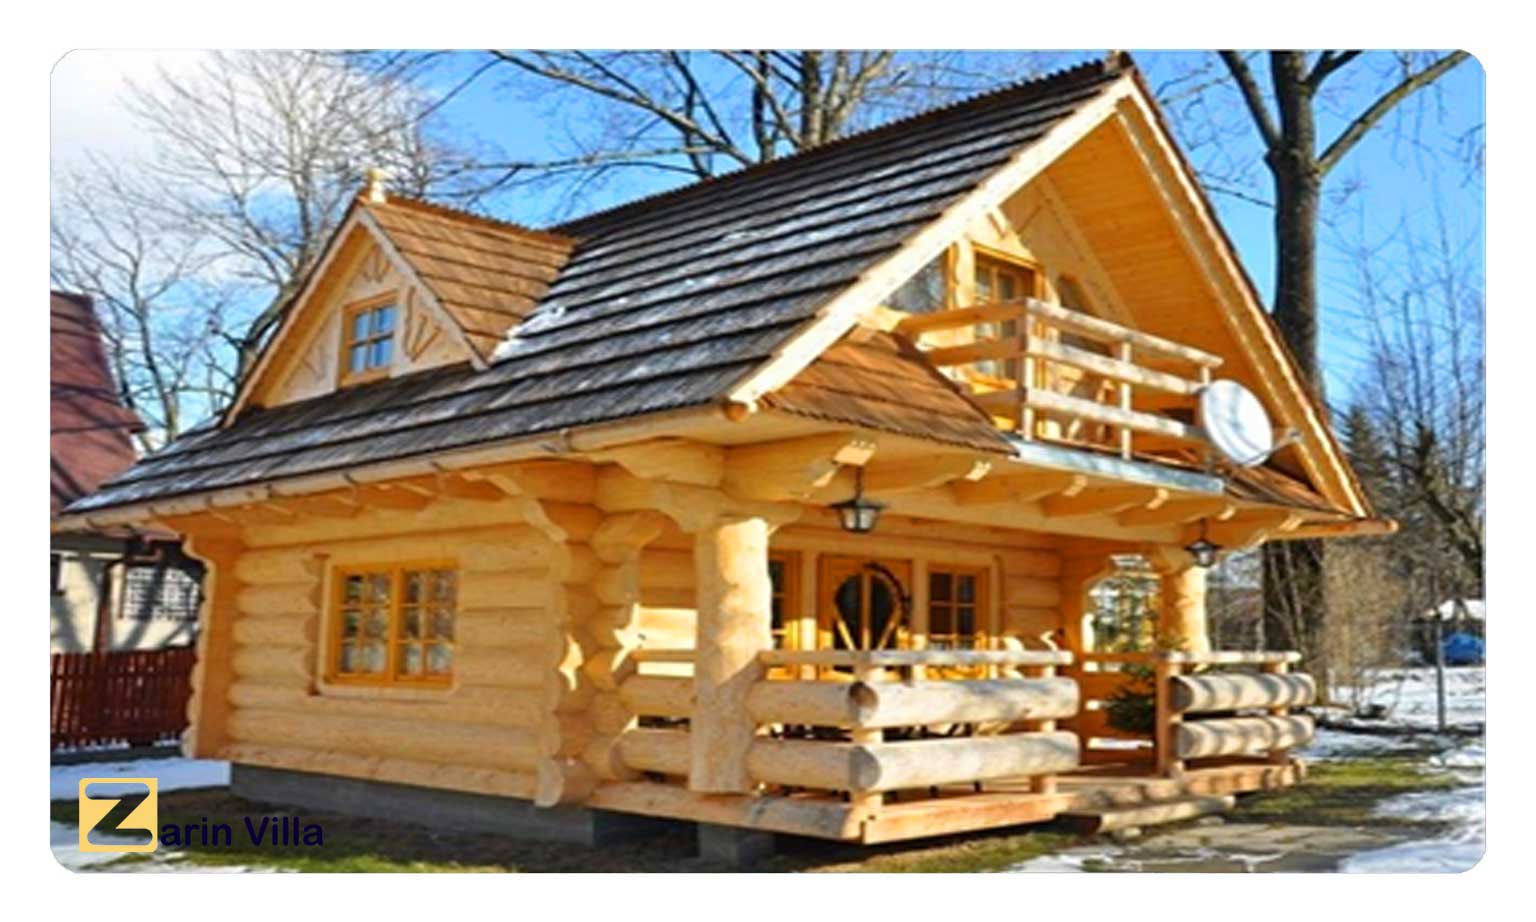 Construction of a wooden hut